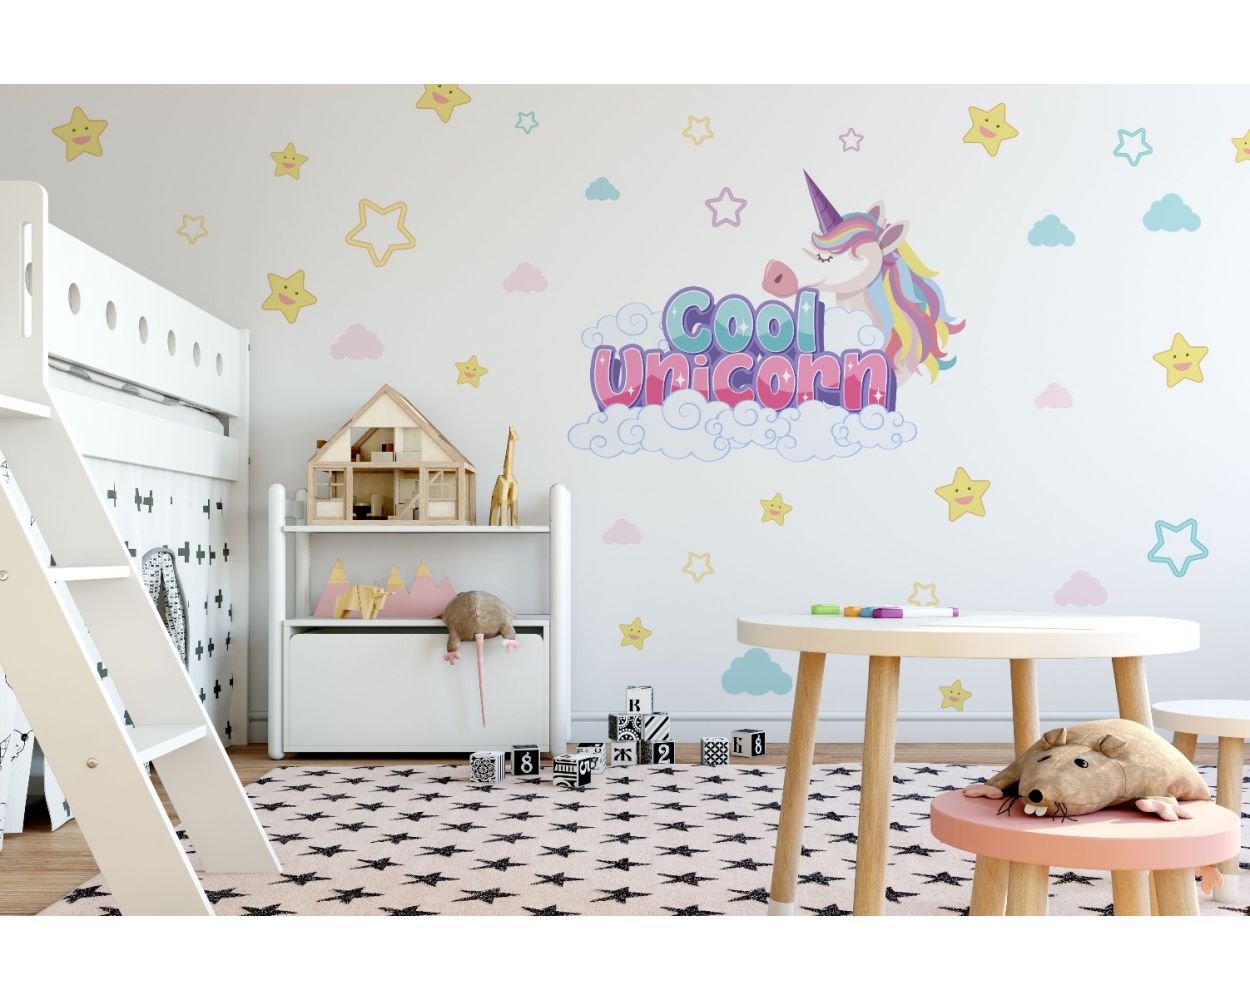 Beautiful Stars & Cool Unicorn Horn Vinyl Wall Stickers For Bedroom wall Decor